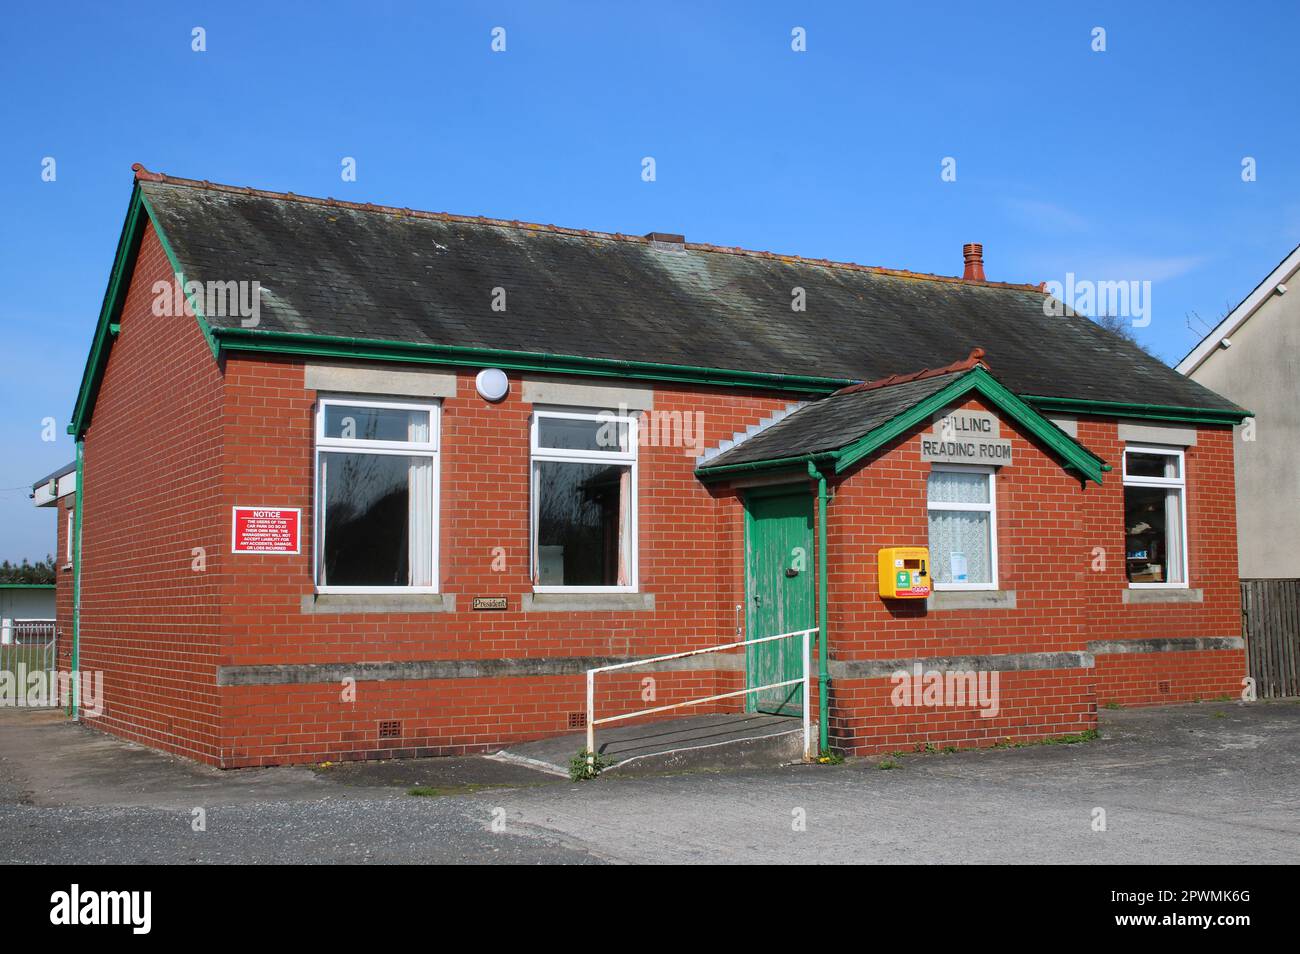 Pilling Reading Room building with emergency defibrillator on the wall, School Lane, Pilling, Preston, Lancashire. Stock Photo